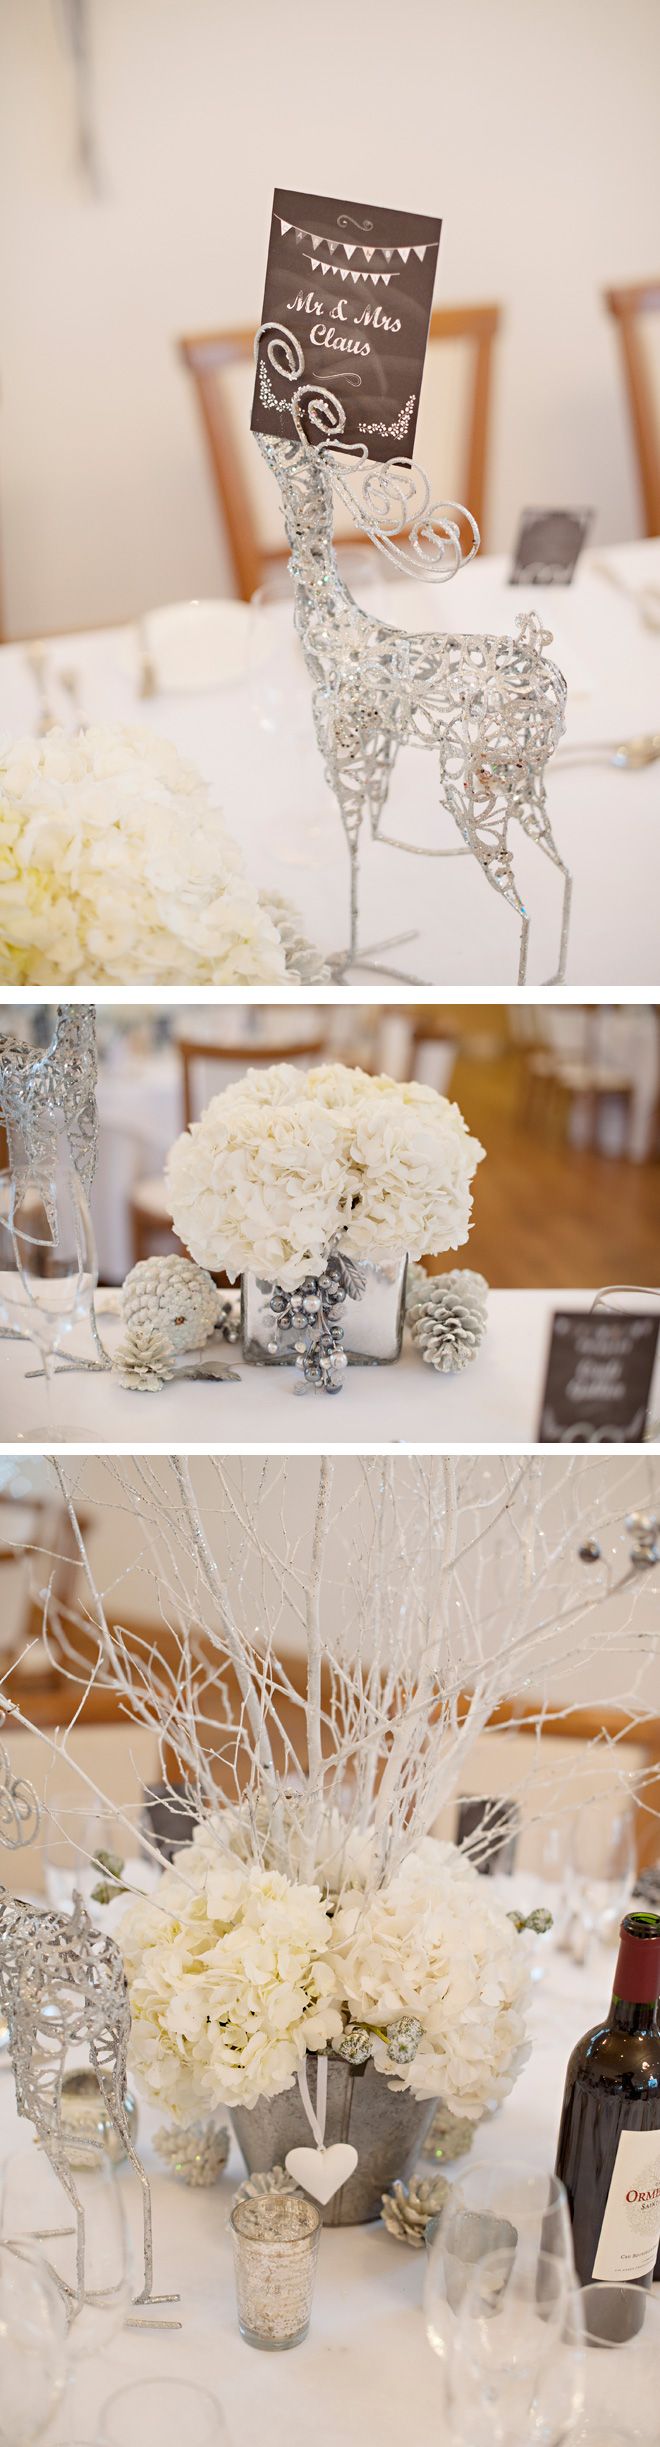 déco-table-mariage-hiver-fleurs-blanches-figurines déco table mariage